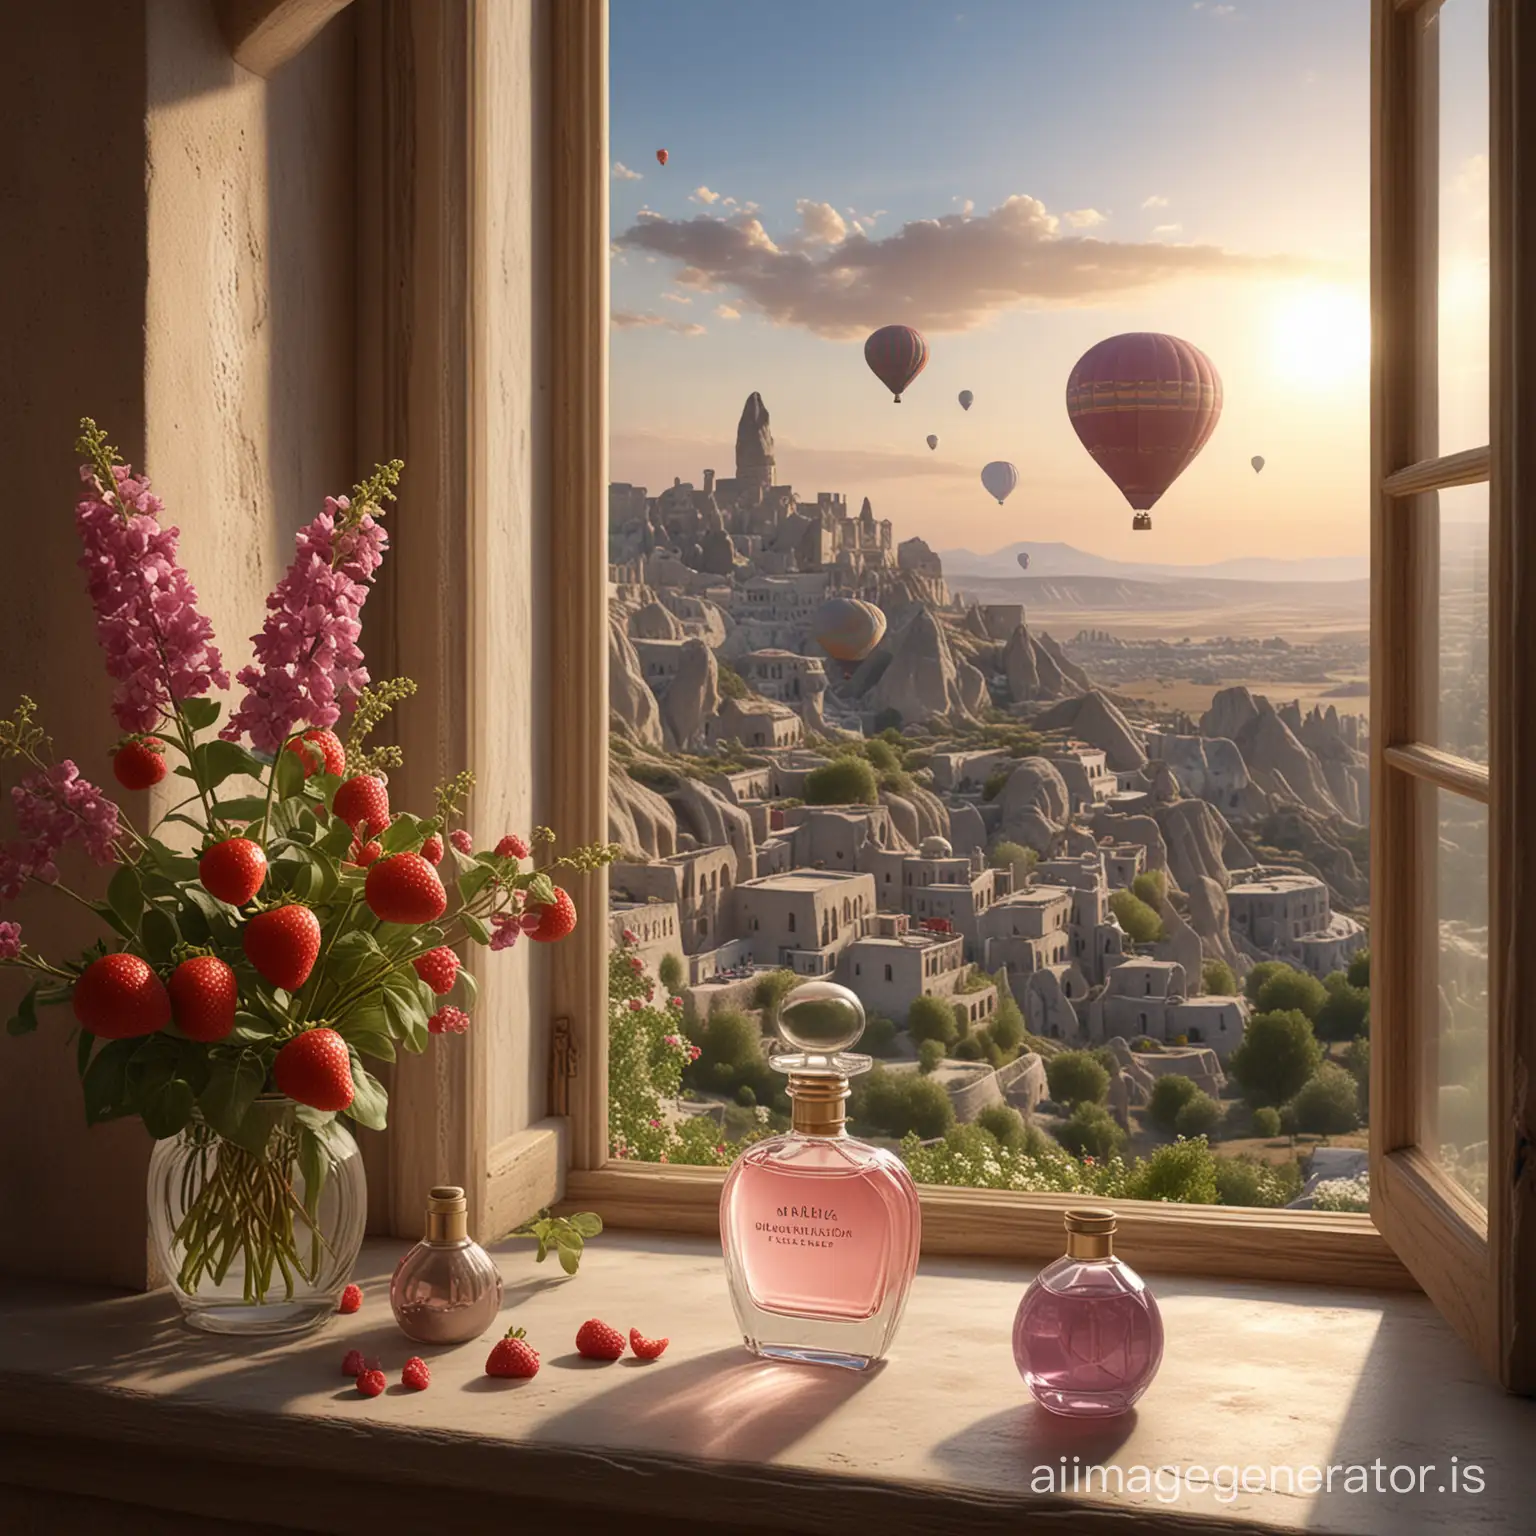 Romantic-Perfume-Product-Display-with-Cappadocia-Balloon-View